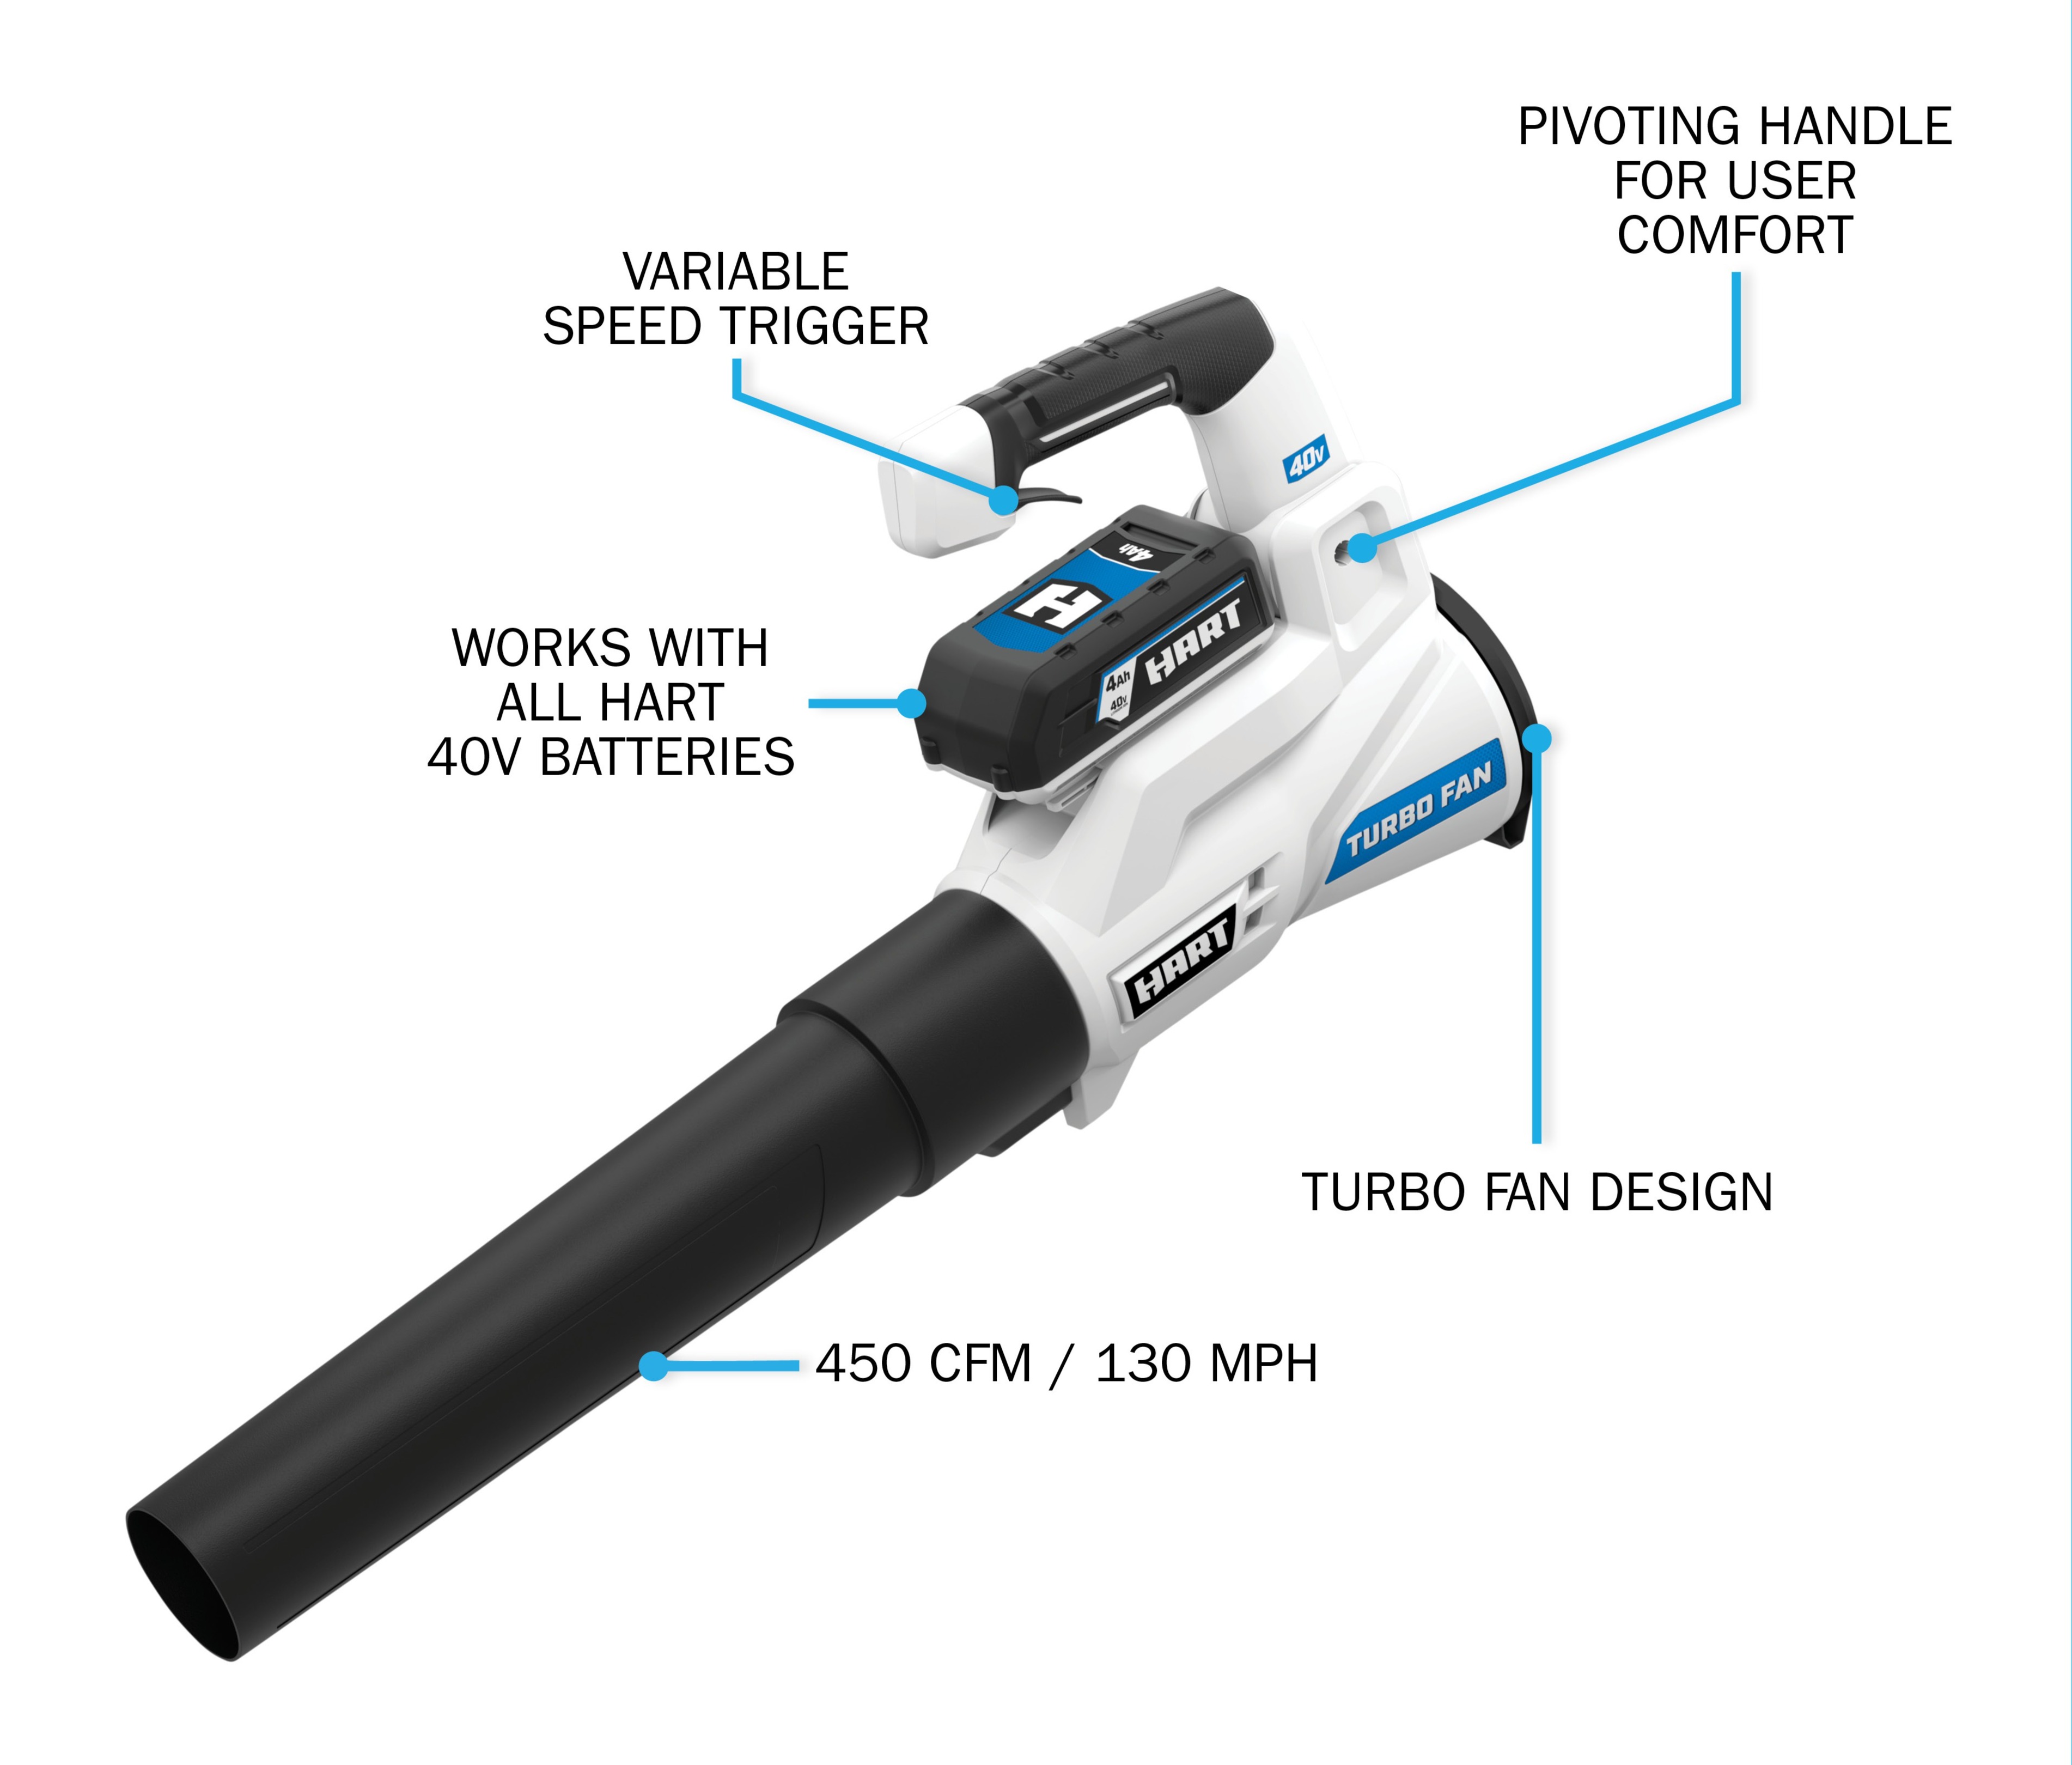 40V 450 CFM Blower Kit Features